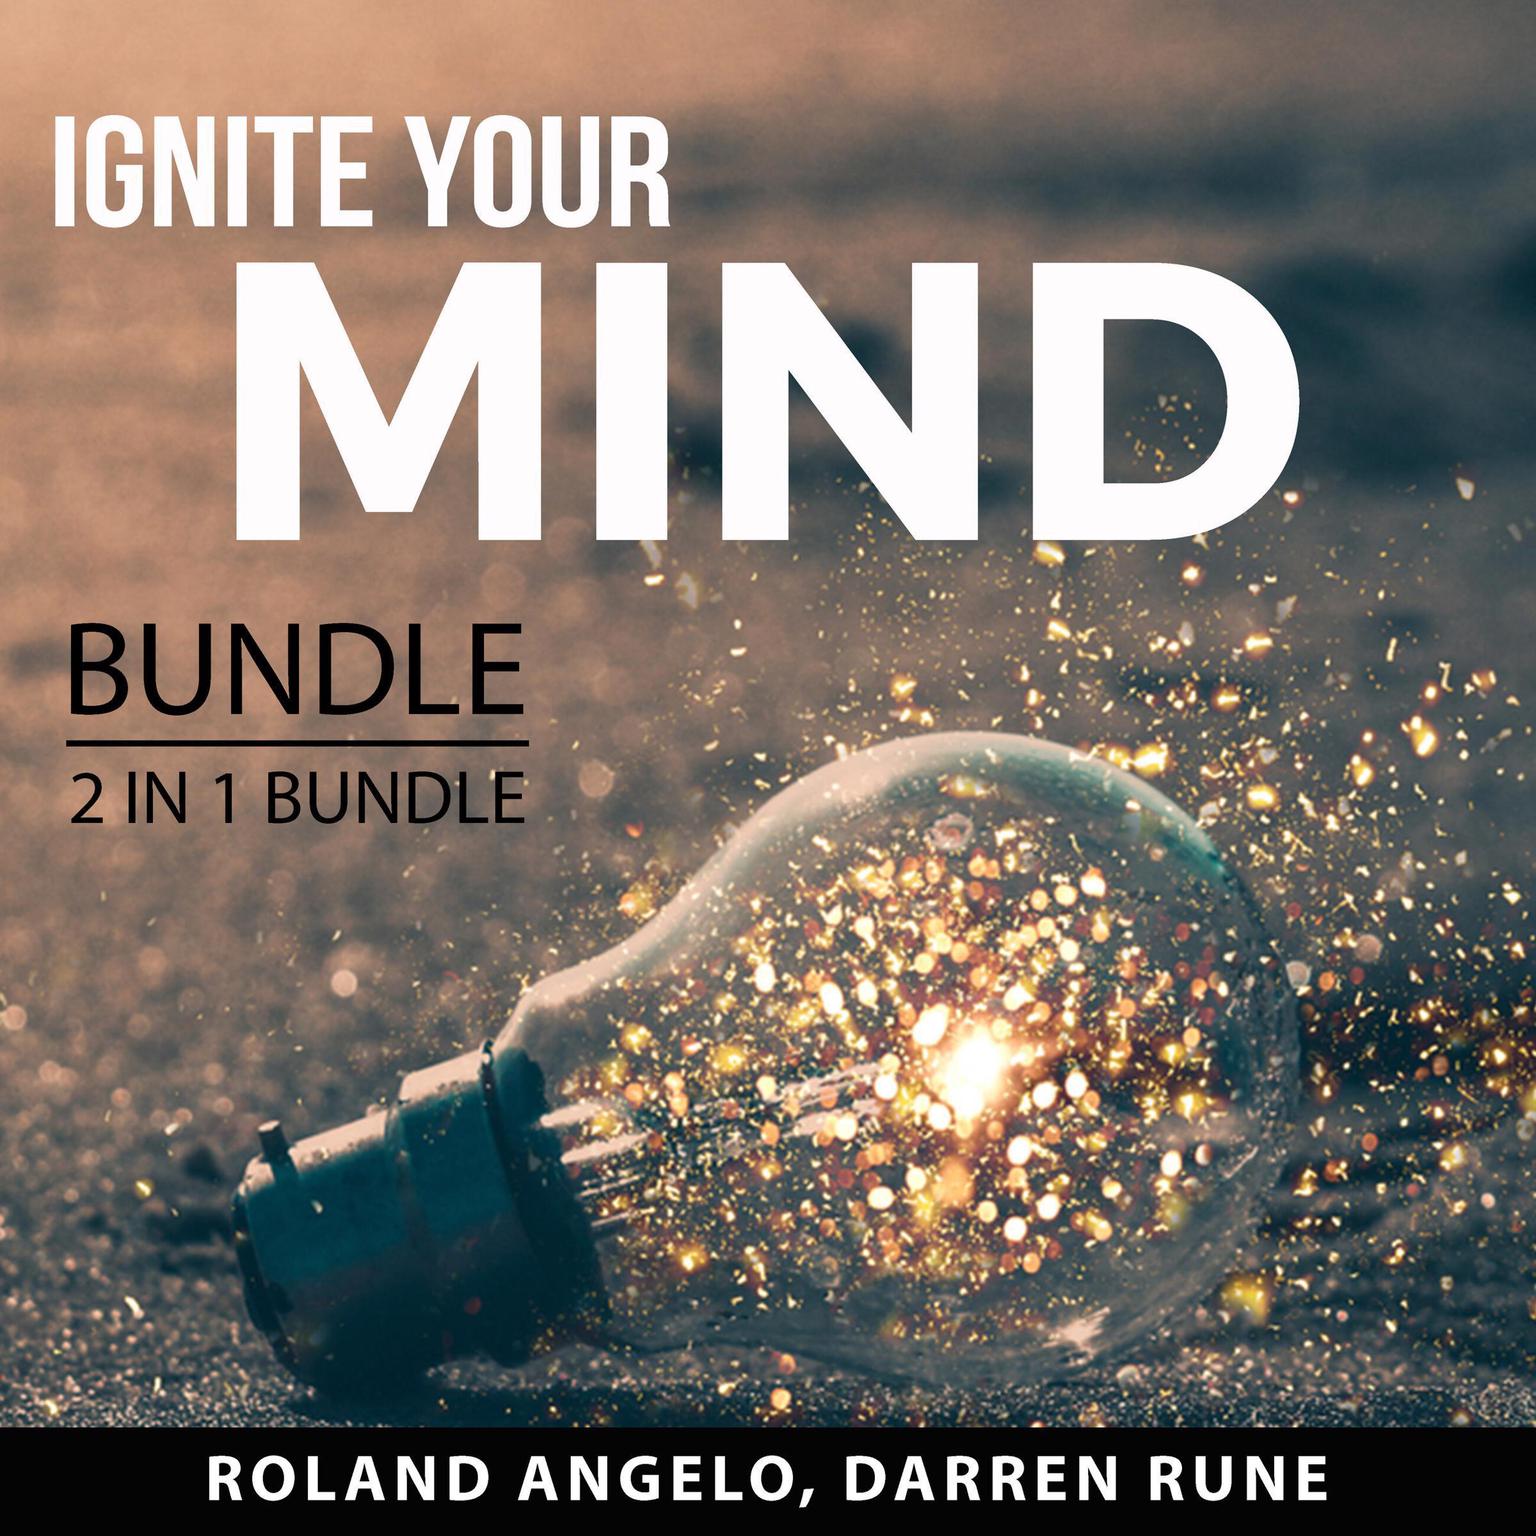 Ignite Your Mind Bundle, 2 in 1 Bundle: Chasing Excellence and Thinking With Excellence: Chasing Excellence and Thinking With Excellence  Audiobook, by Roland Angelo